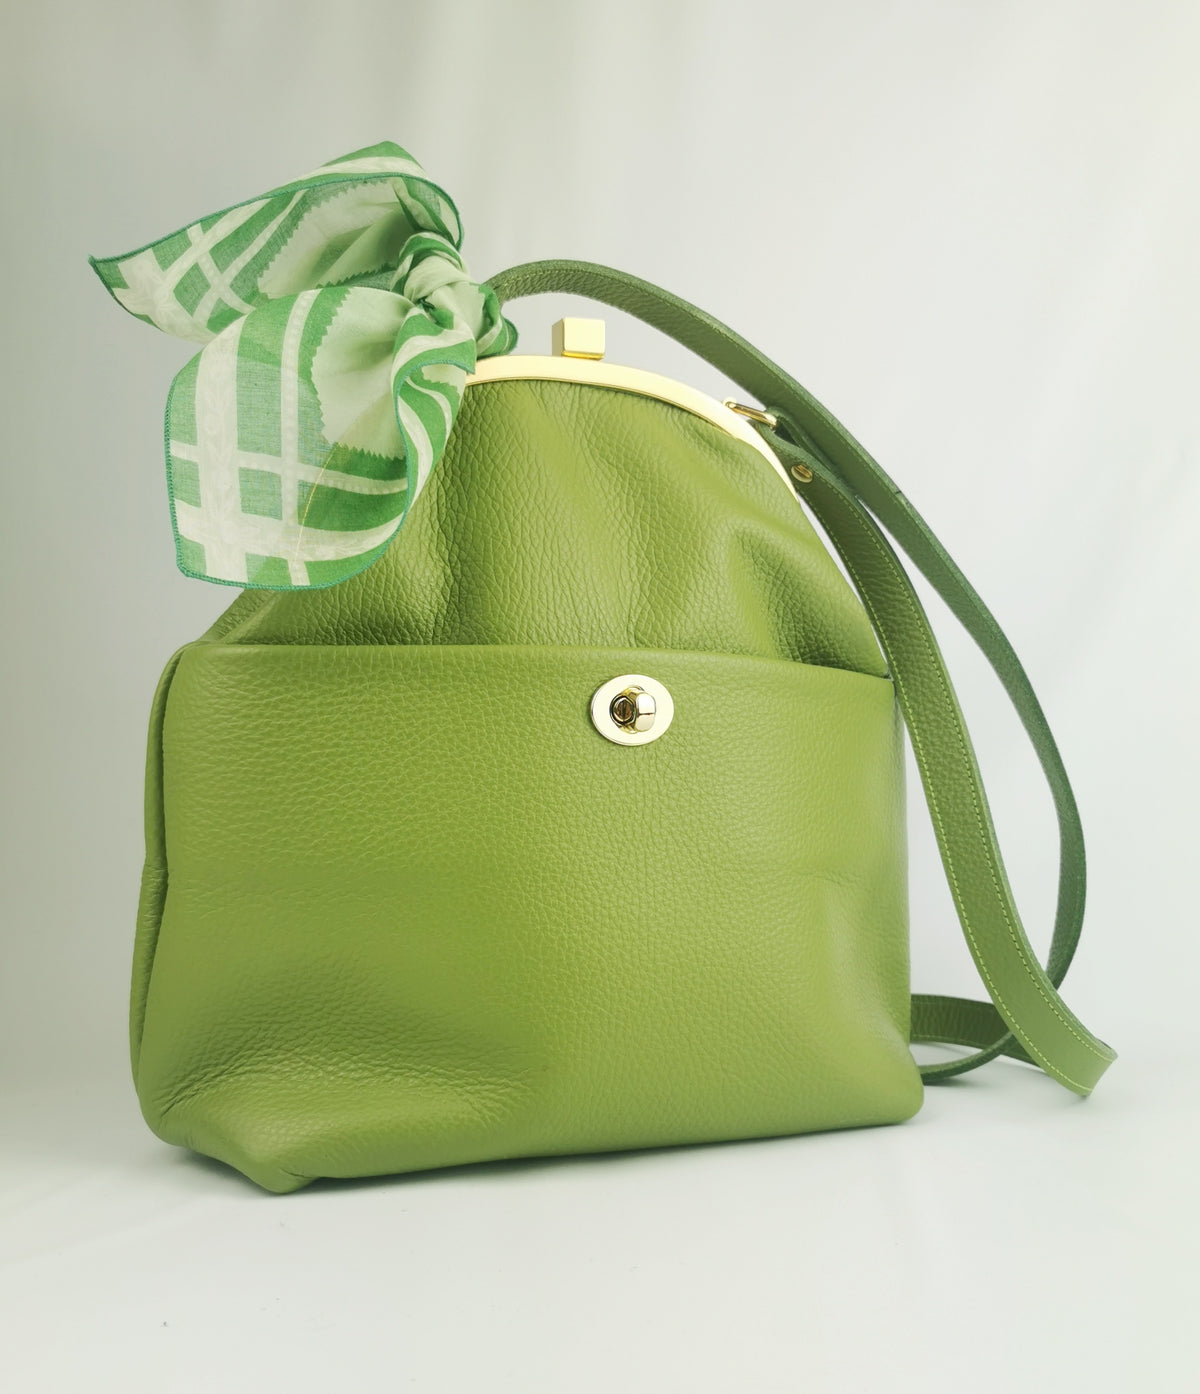 Emma rucksack in apple green